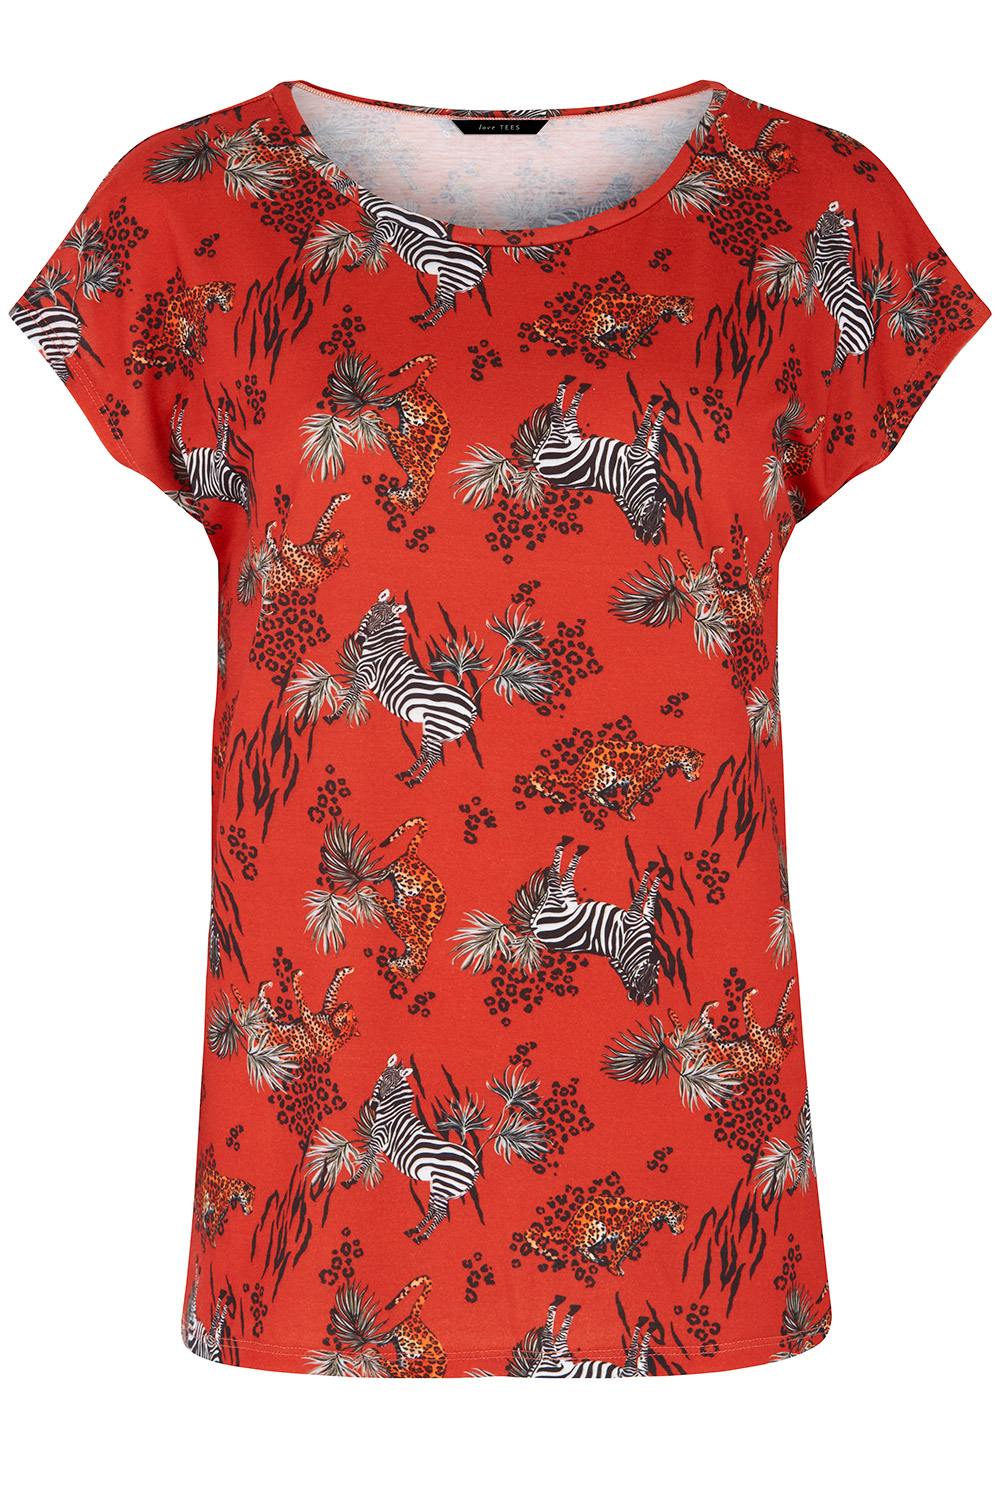 safari animal print shirt